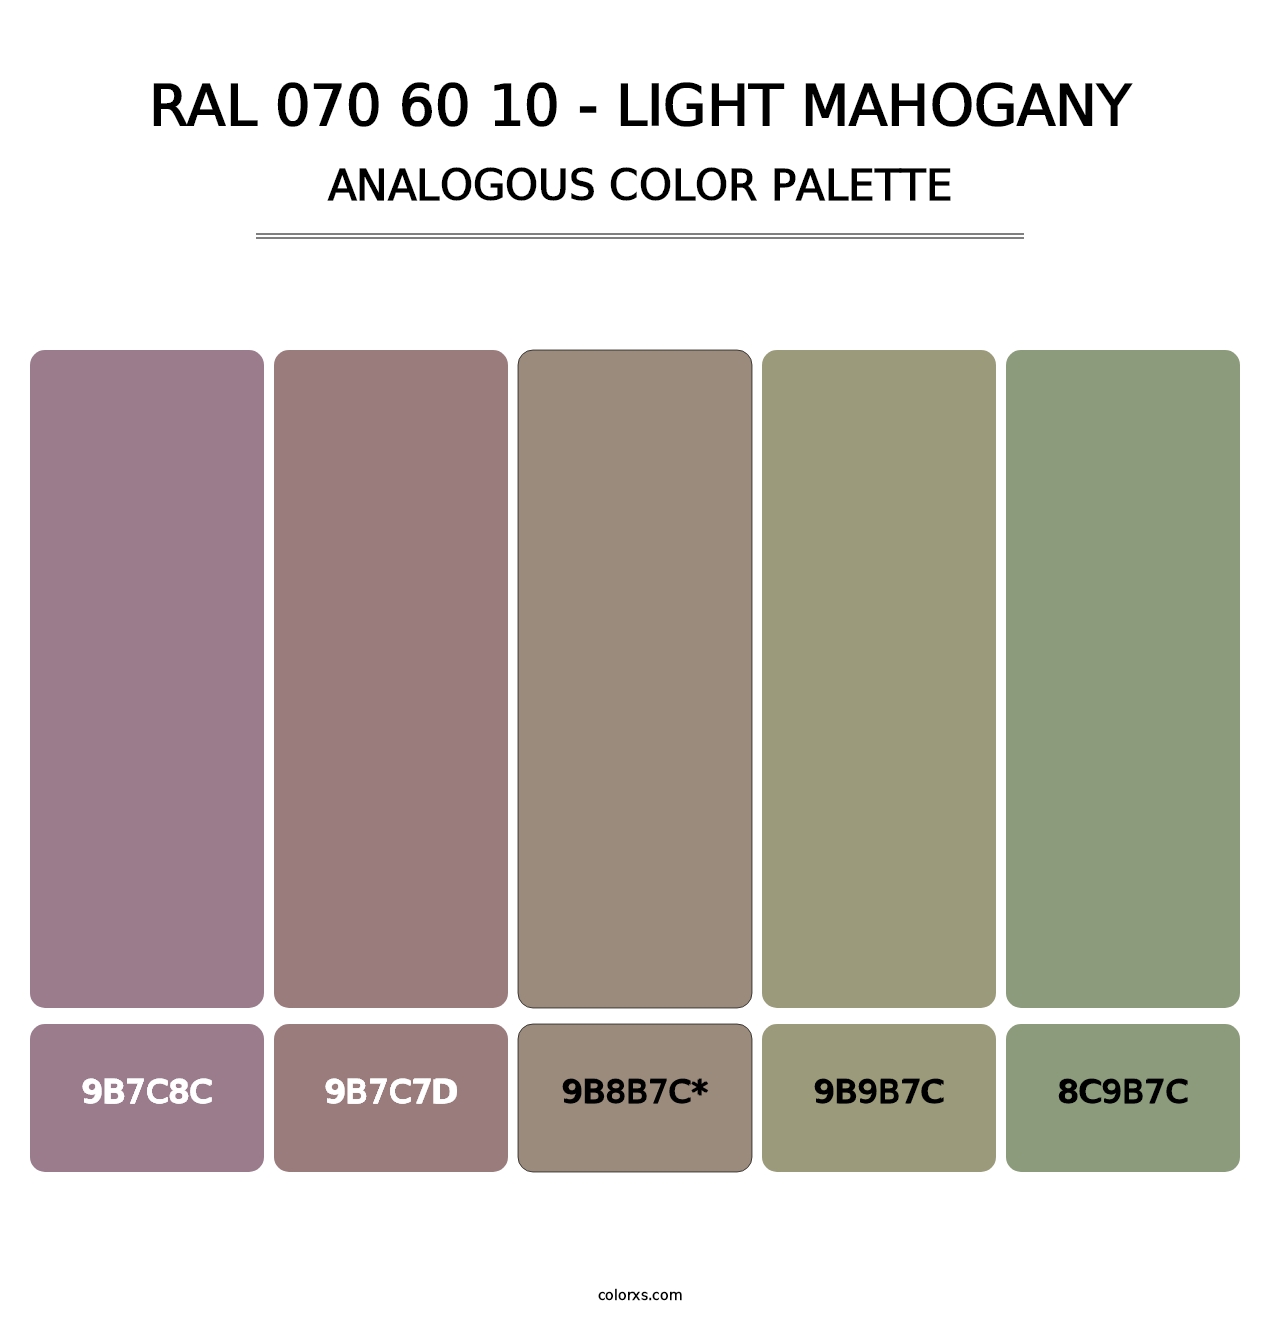 RAL 070 60 10 - Light Mahogany - Analogous Color Palette